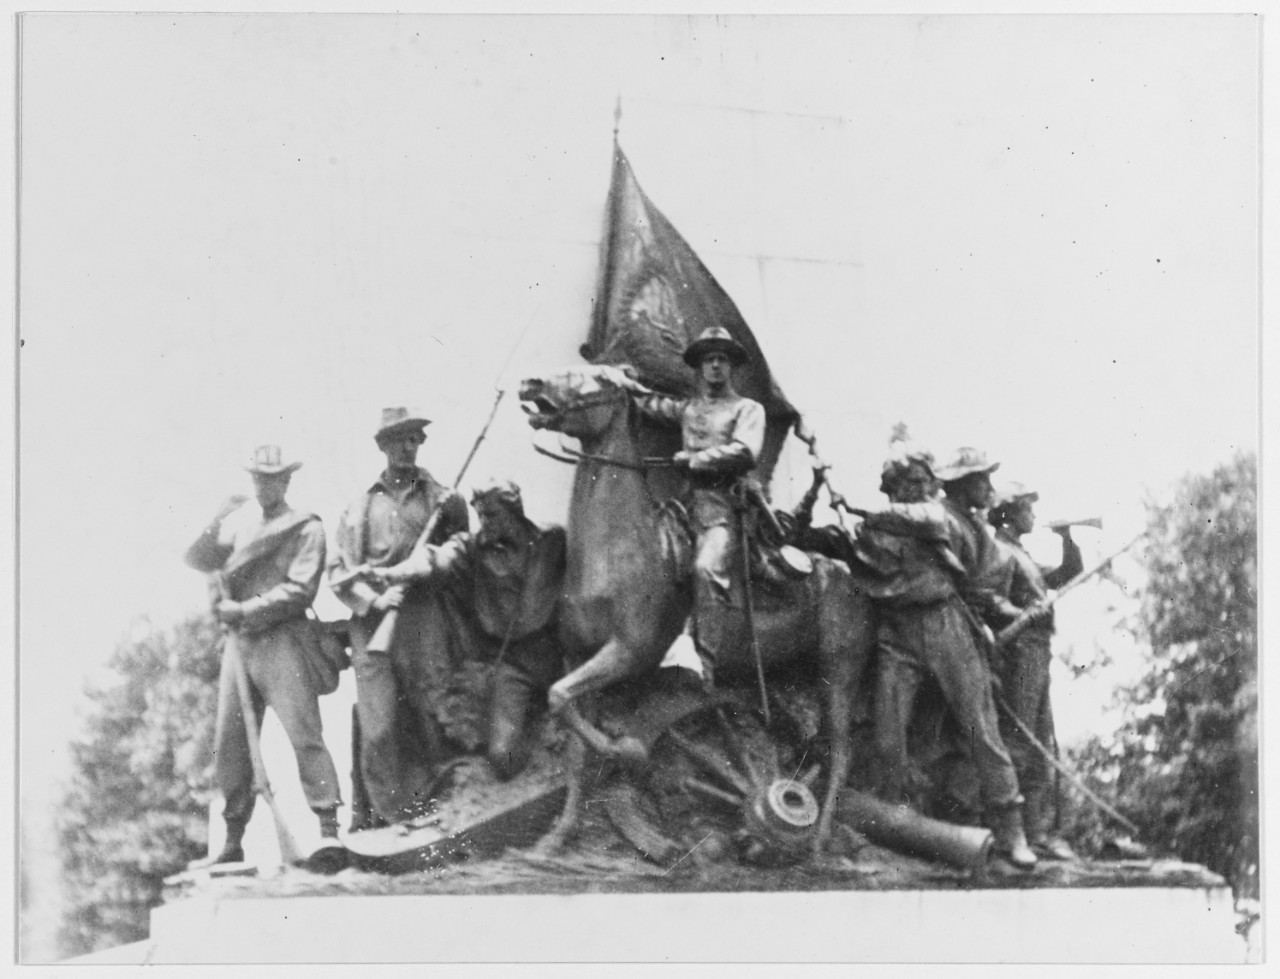 The Robert E. Lee Statue at Gettysburg